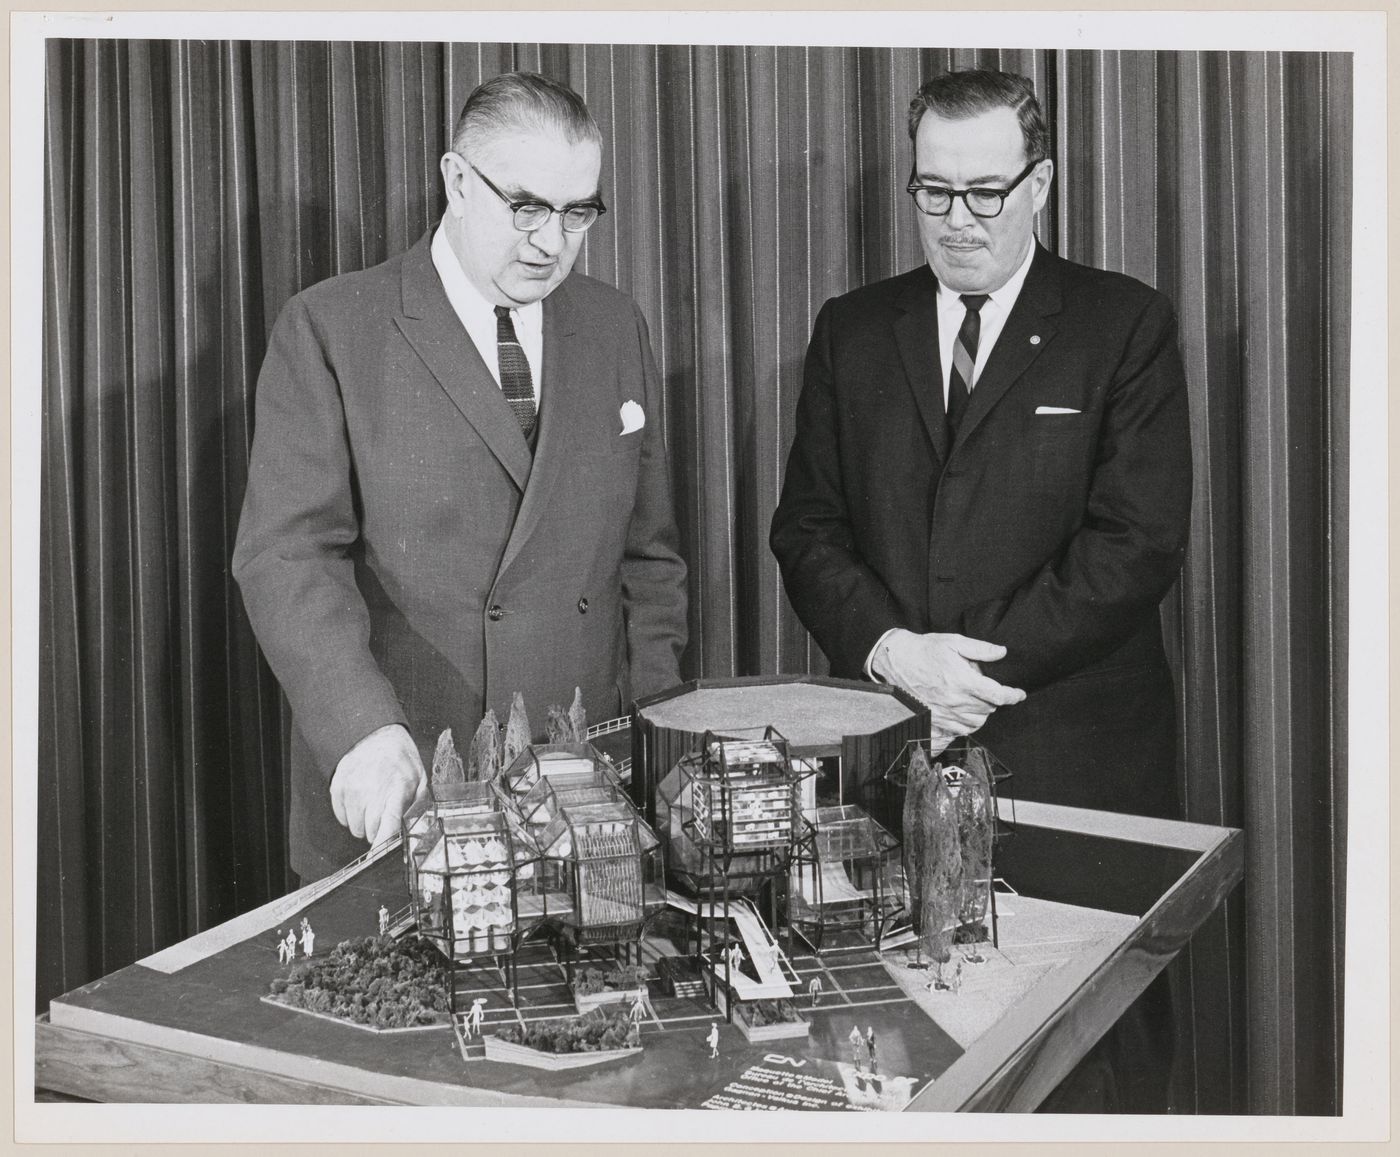 Donald Gordon and Robert F. Shaw with CN's Expo 67 pavillion model